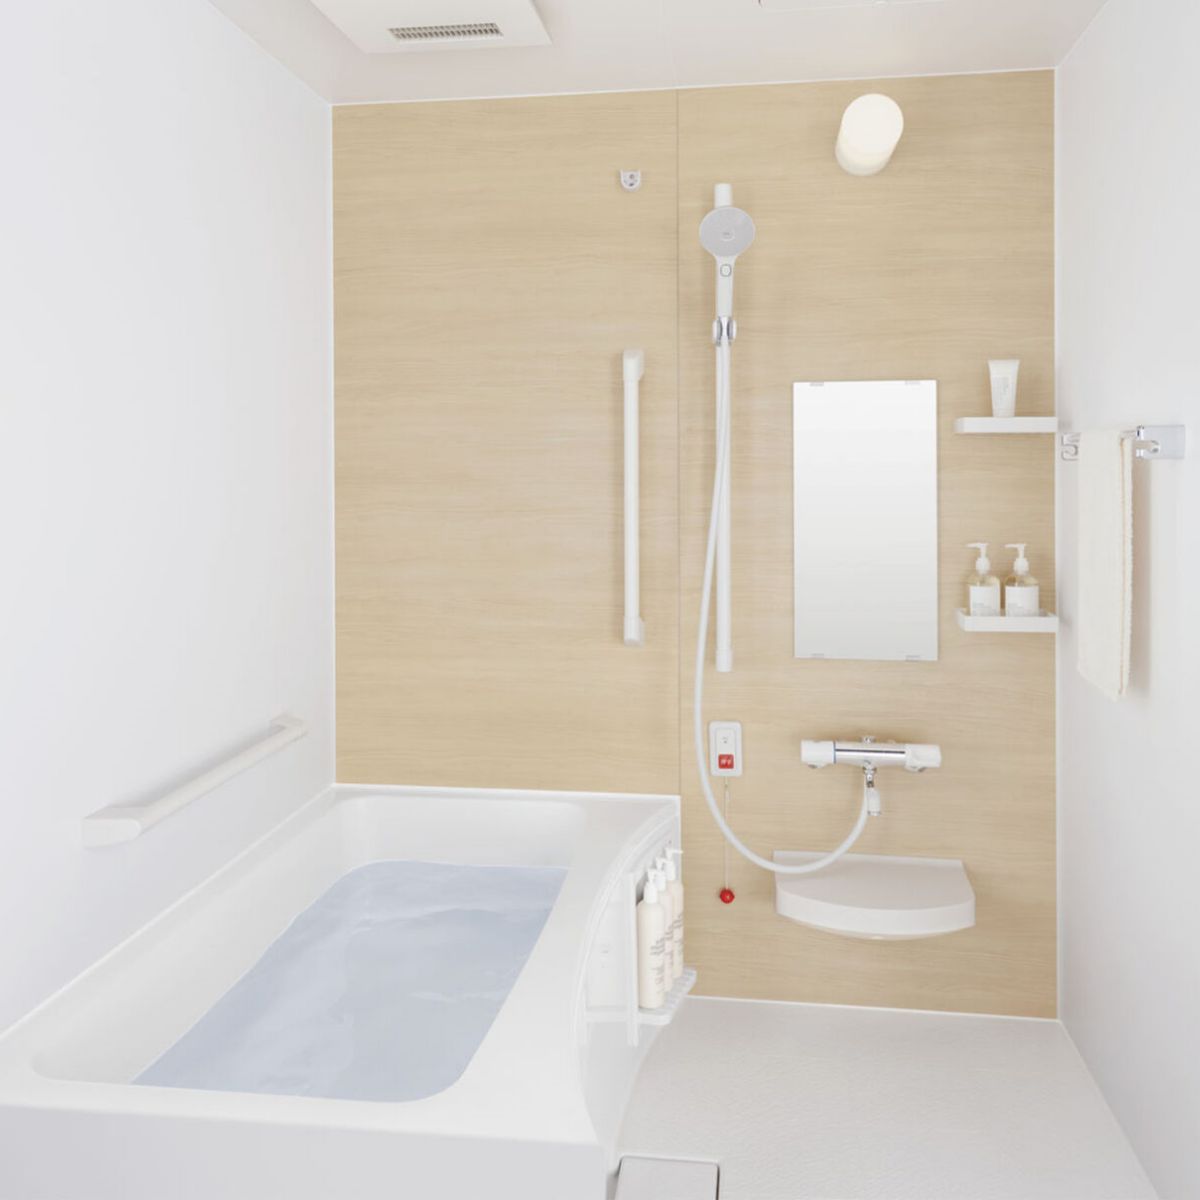 ☆LIXIL集合住宅用ユニットバス71%OFF☆BW-1116サイズ 浴室、浴槽、洗面所